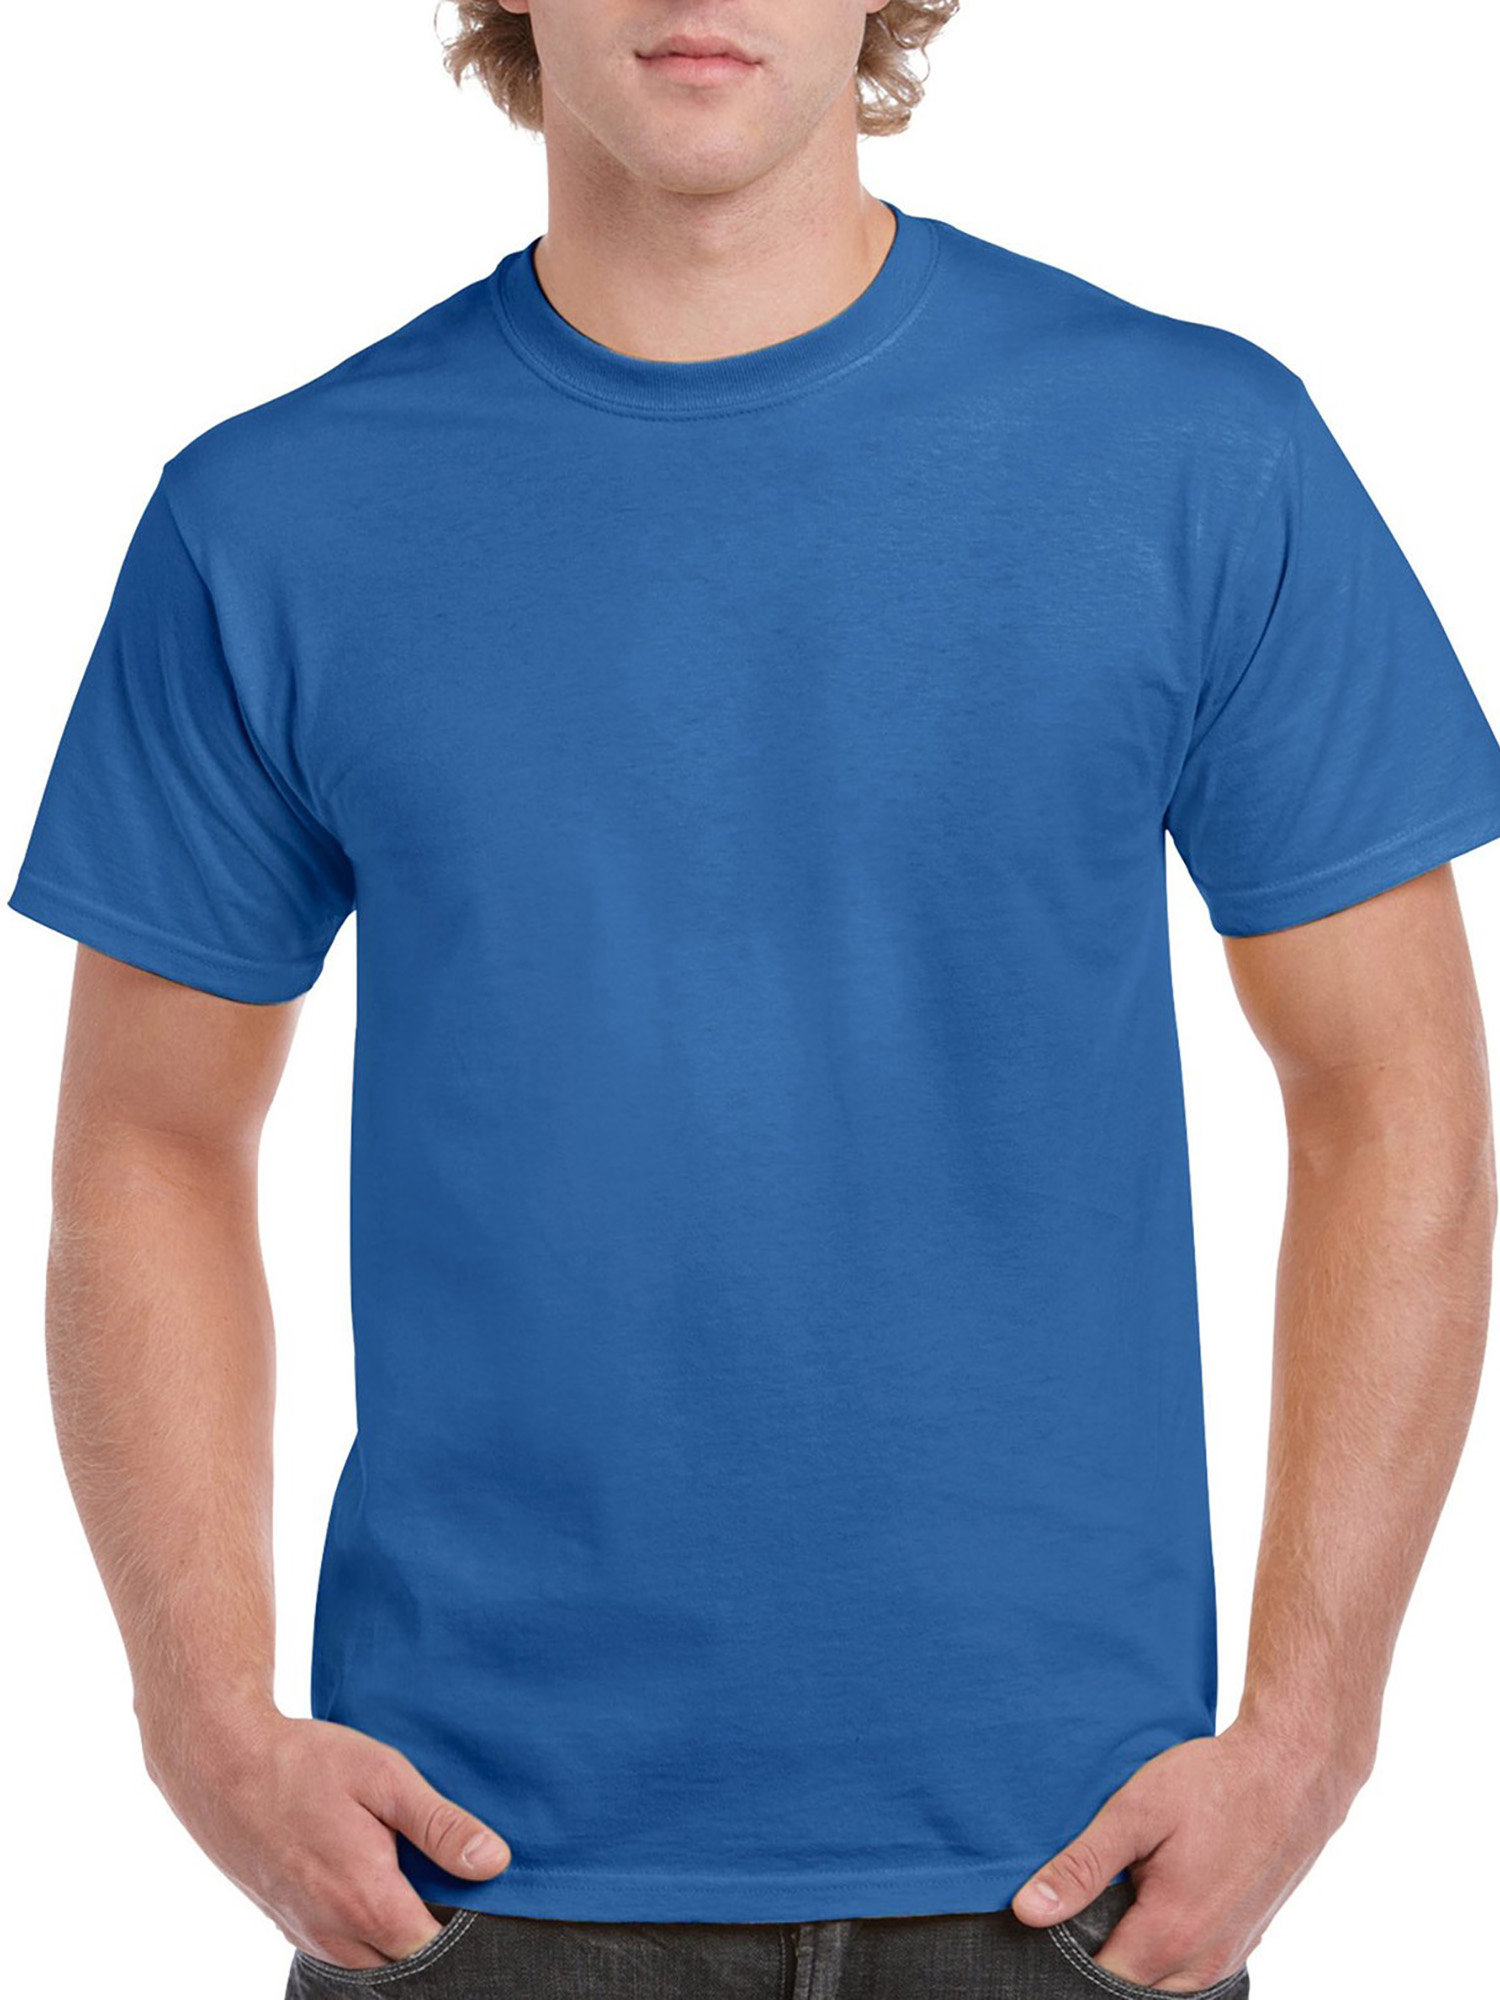 Gildan Men's Ultra Cotton Short Sleeve T-Shirt, 2-Pack, up to size 5XL - image 3 of 4